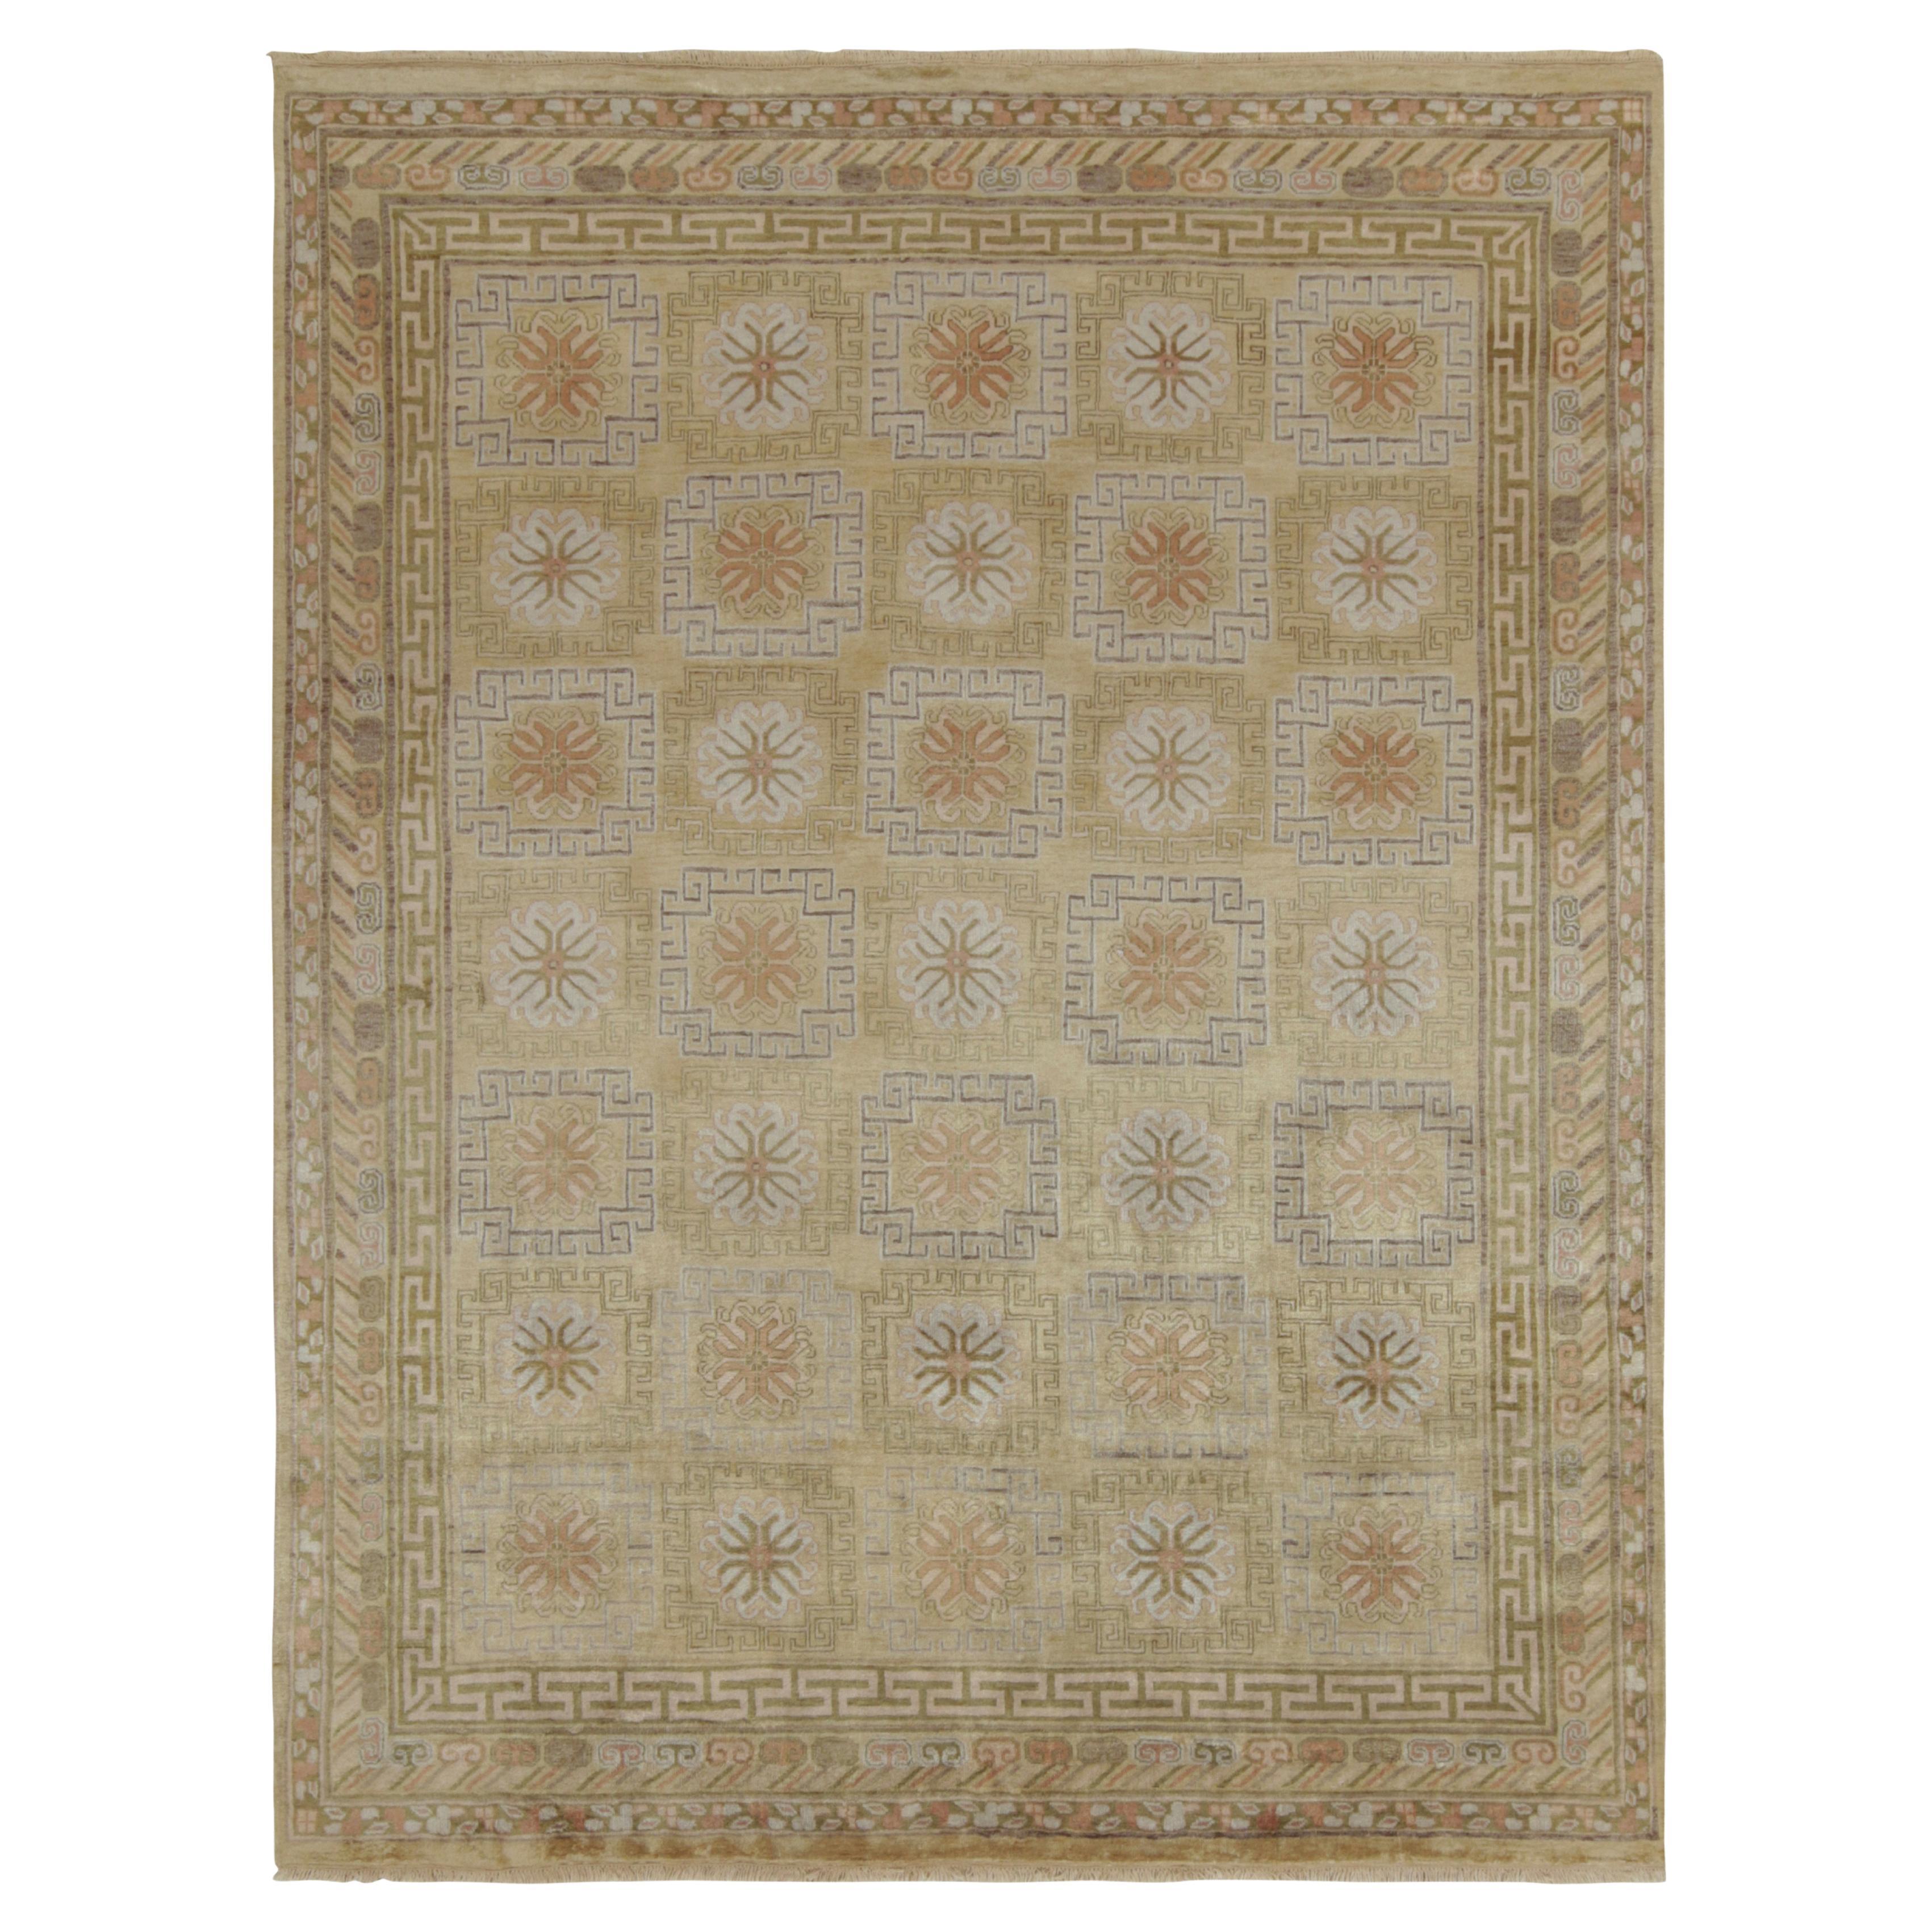 Rug & Kilim’s Antique Khotan style rug in Gold & Beige-Brown Geometric Patterns